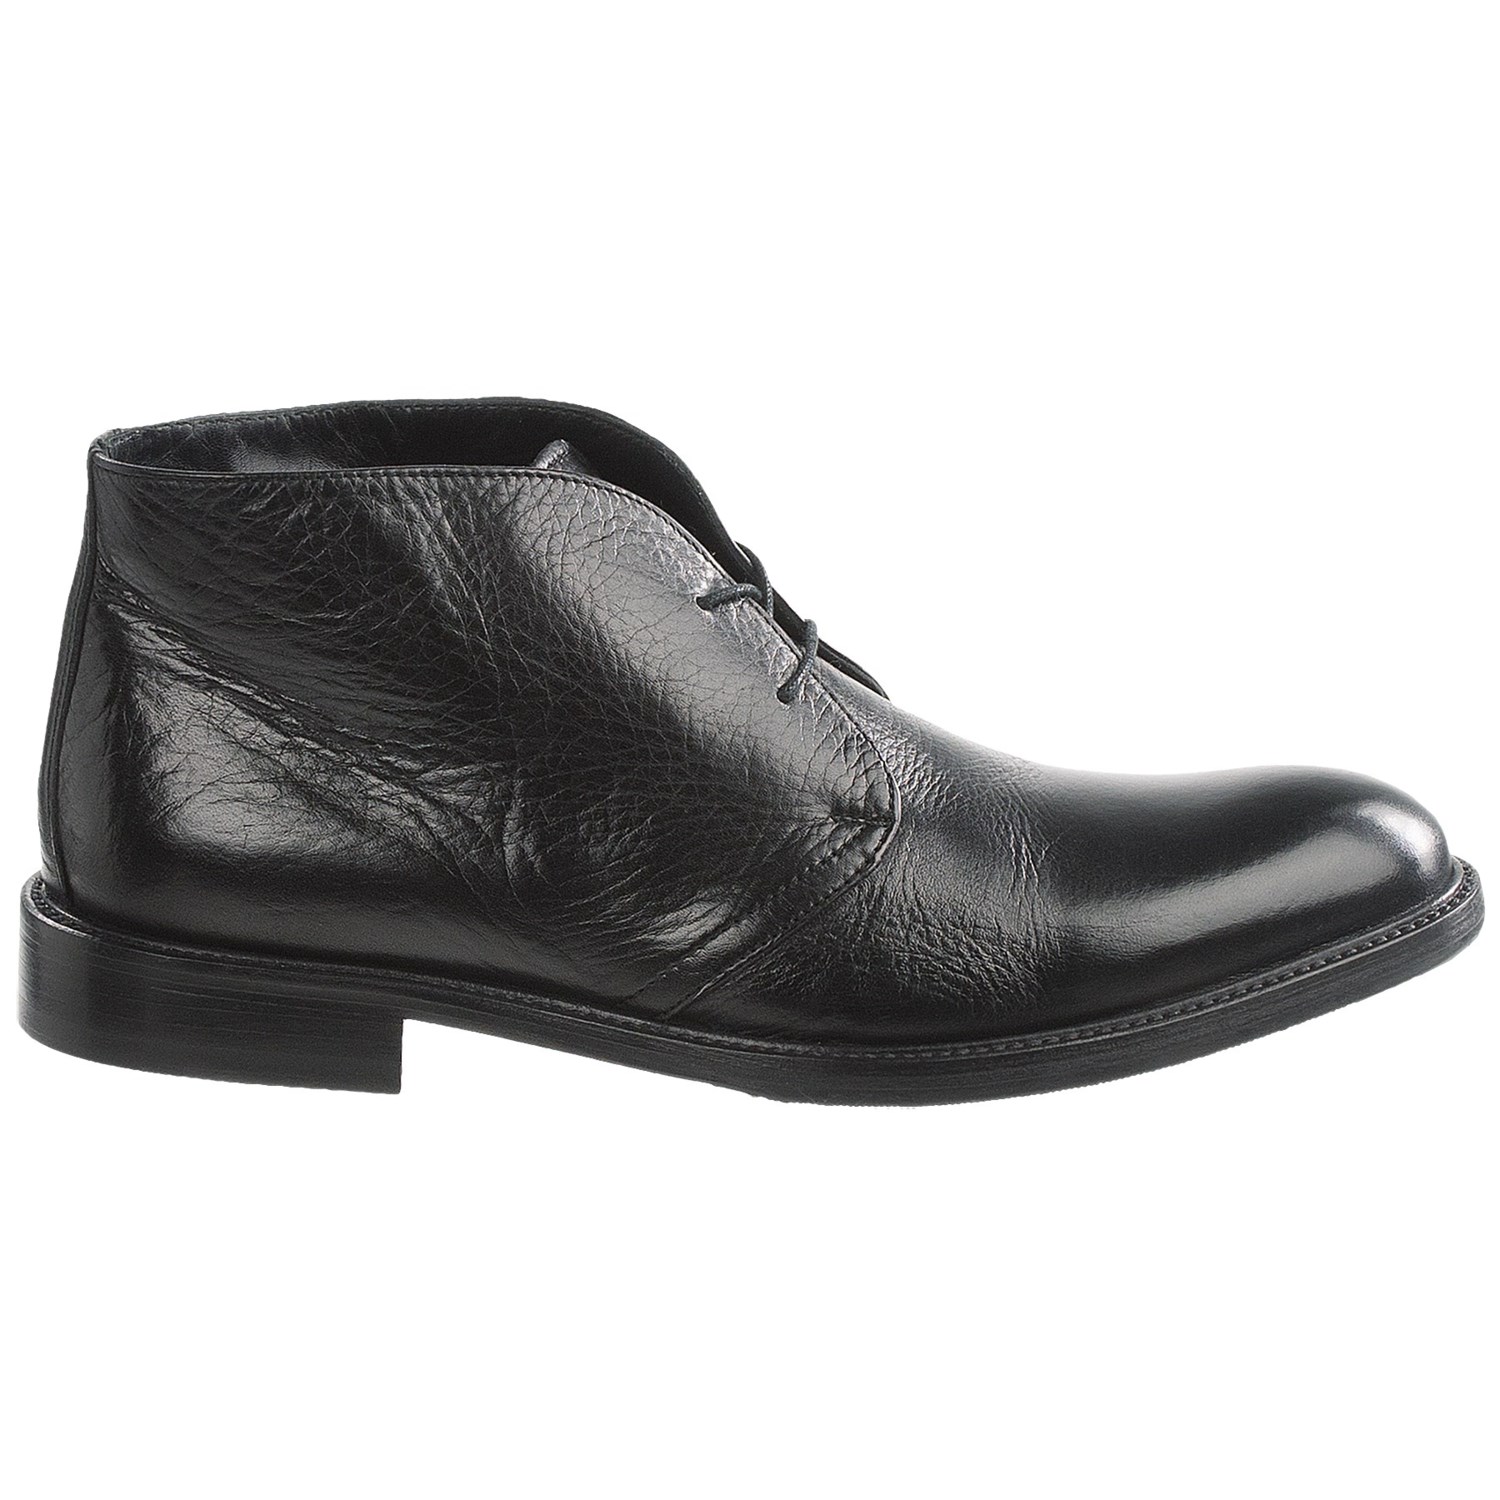 Gordon Rush Bowden Chukka Boots (For Men) 8017V - Save 40%